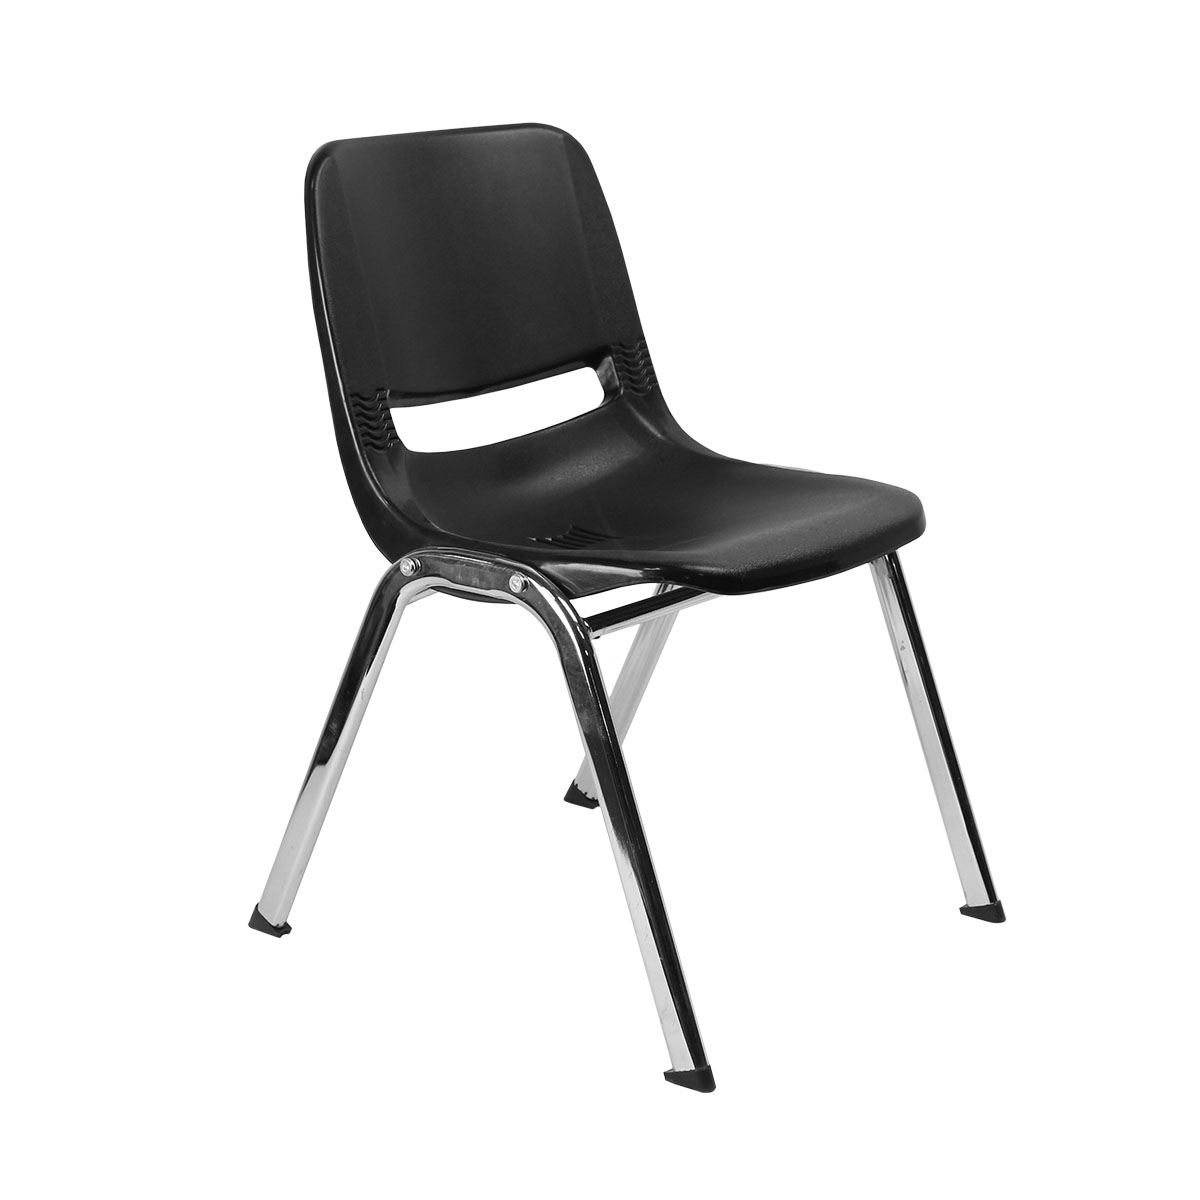 Chair Black Seat Chrome Leg Stacking Child Size